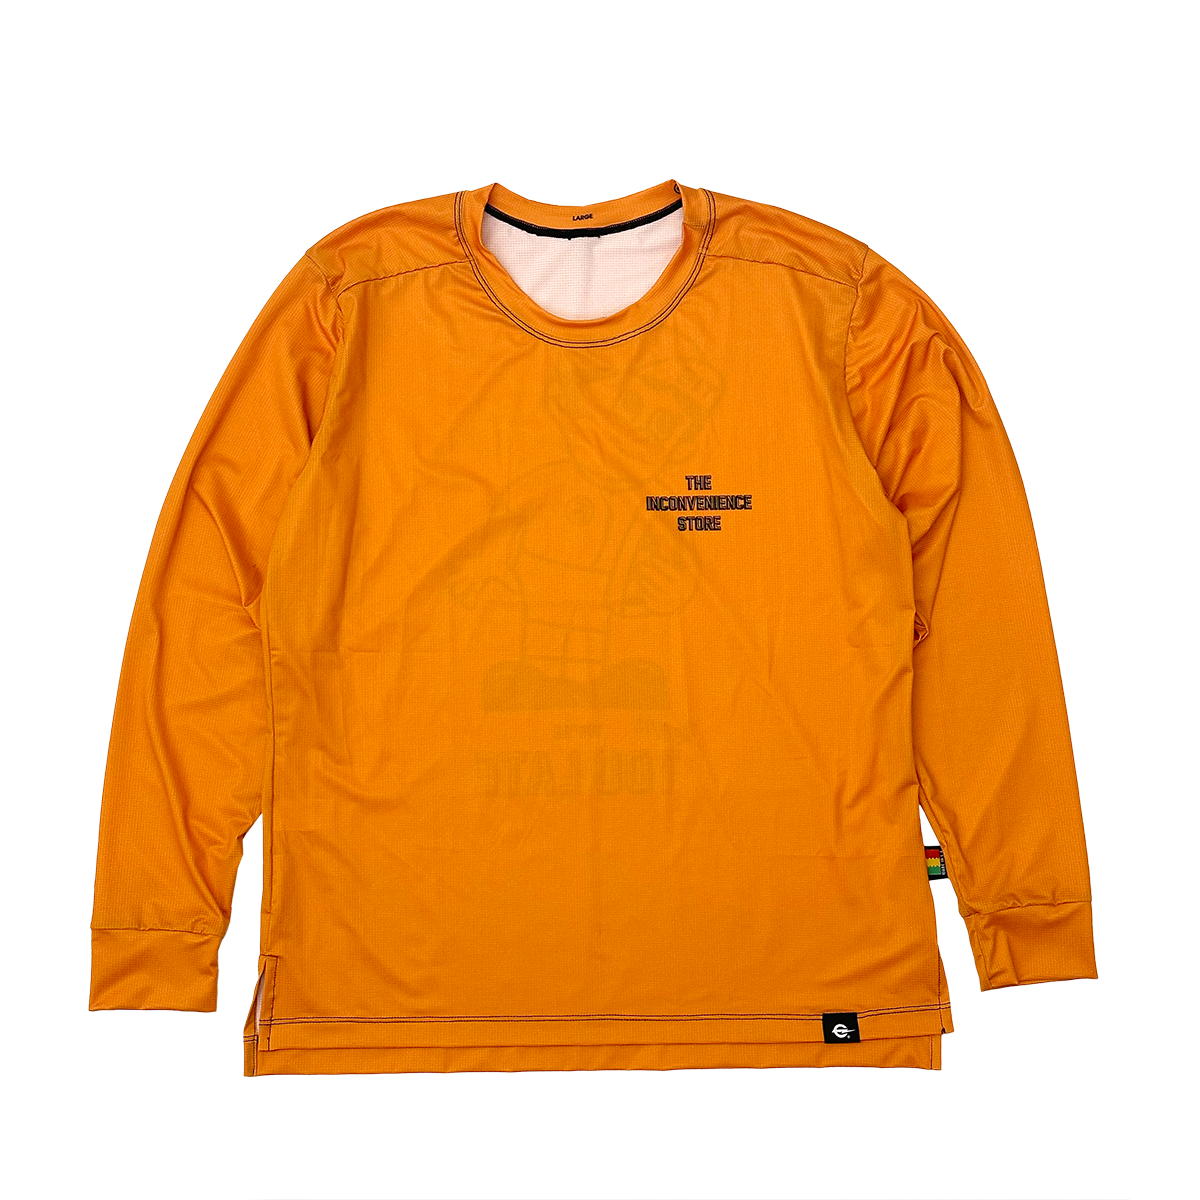 Team Too Late/The Inconvenience Store Virgil Tech Shirt Orange